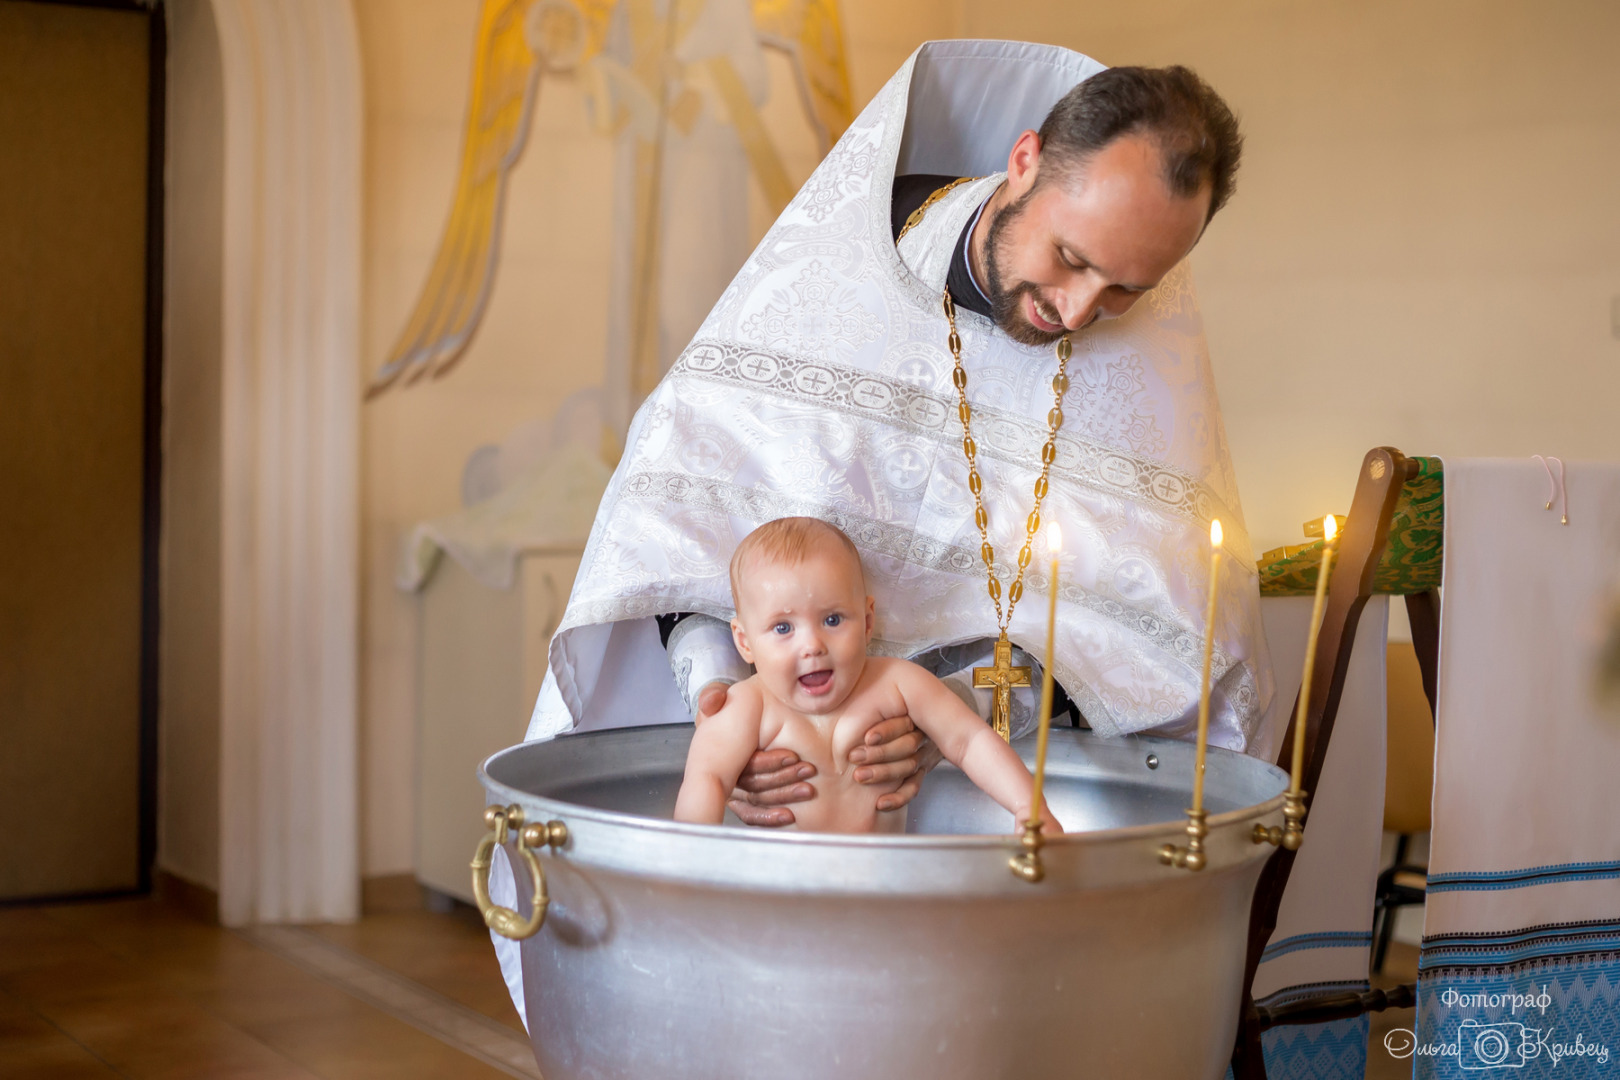 Крестят ли детей на пасху. Крестят ли в пост детей в церкви. Крестят ли в пост ребенка. Крестят ли детей в пост Великий.